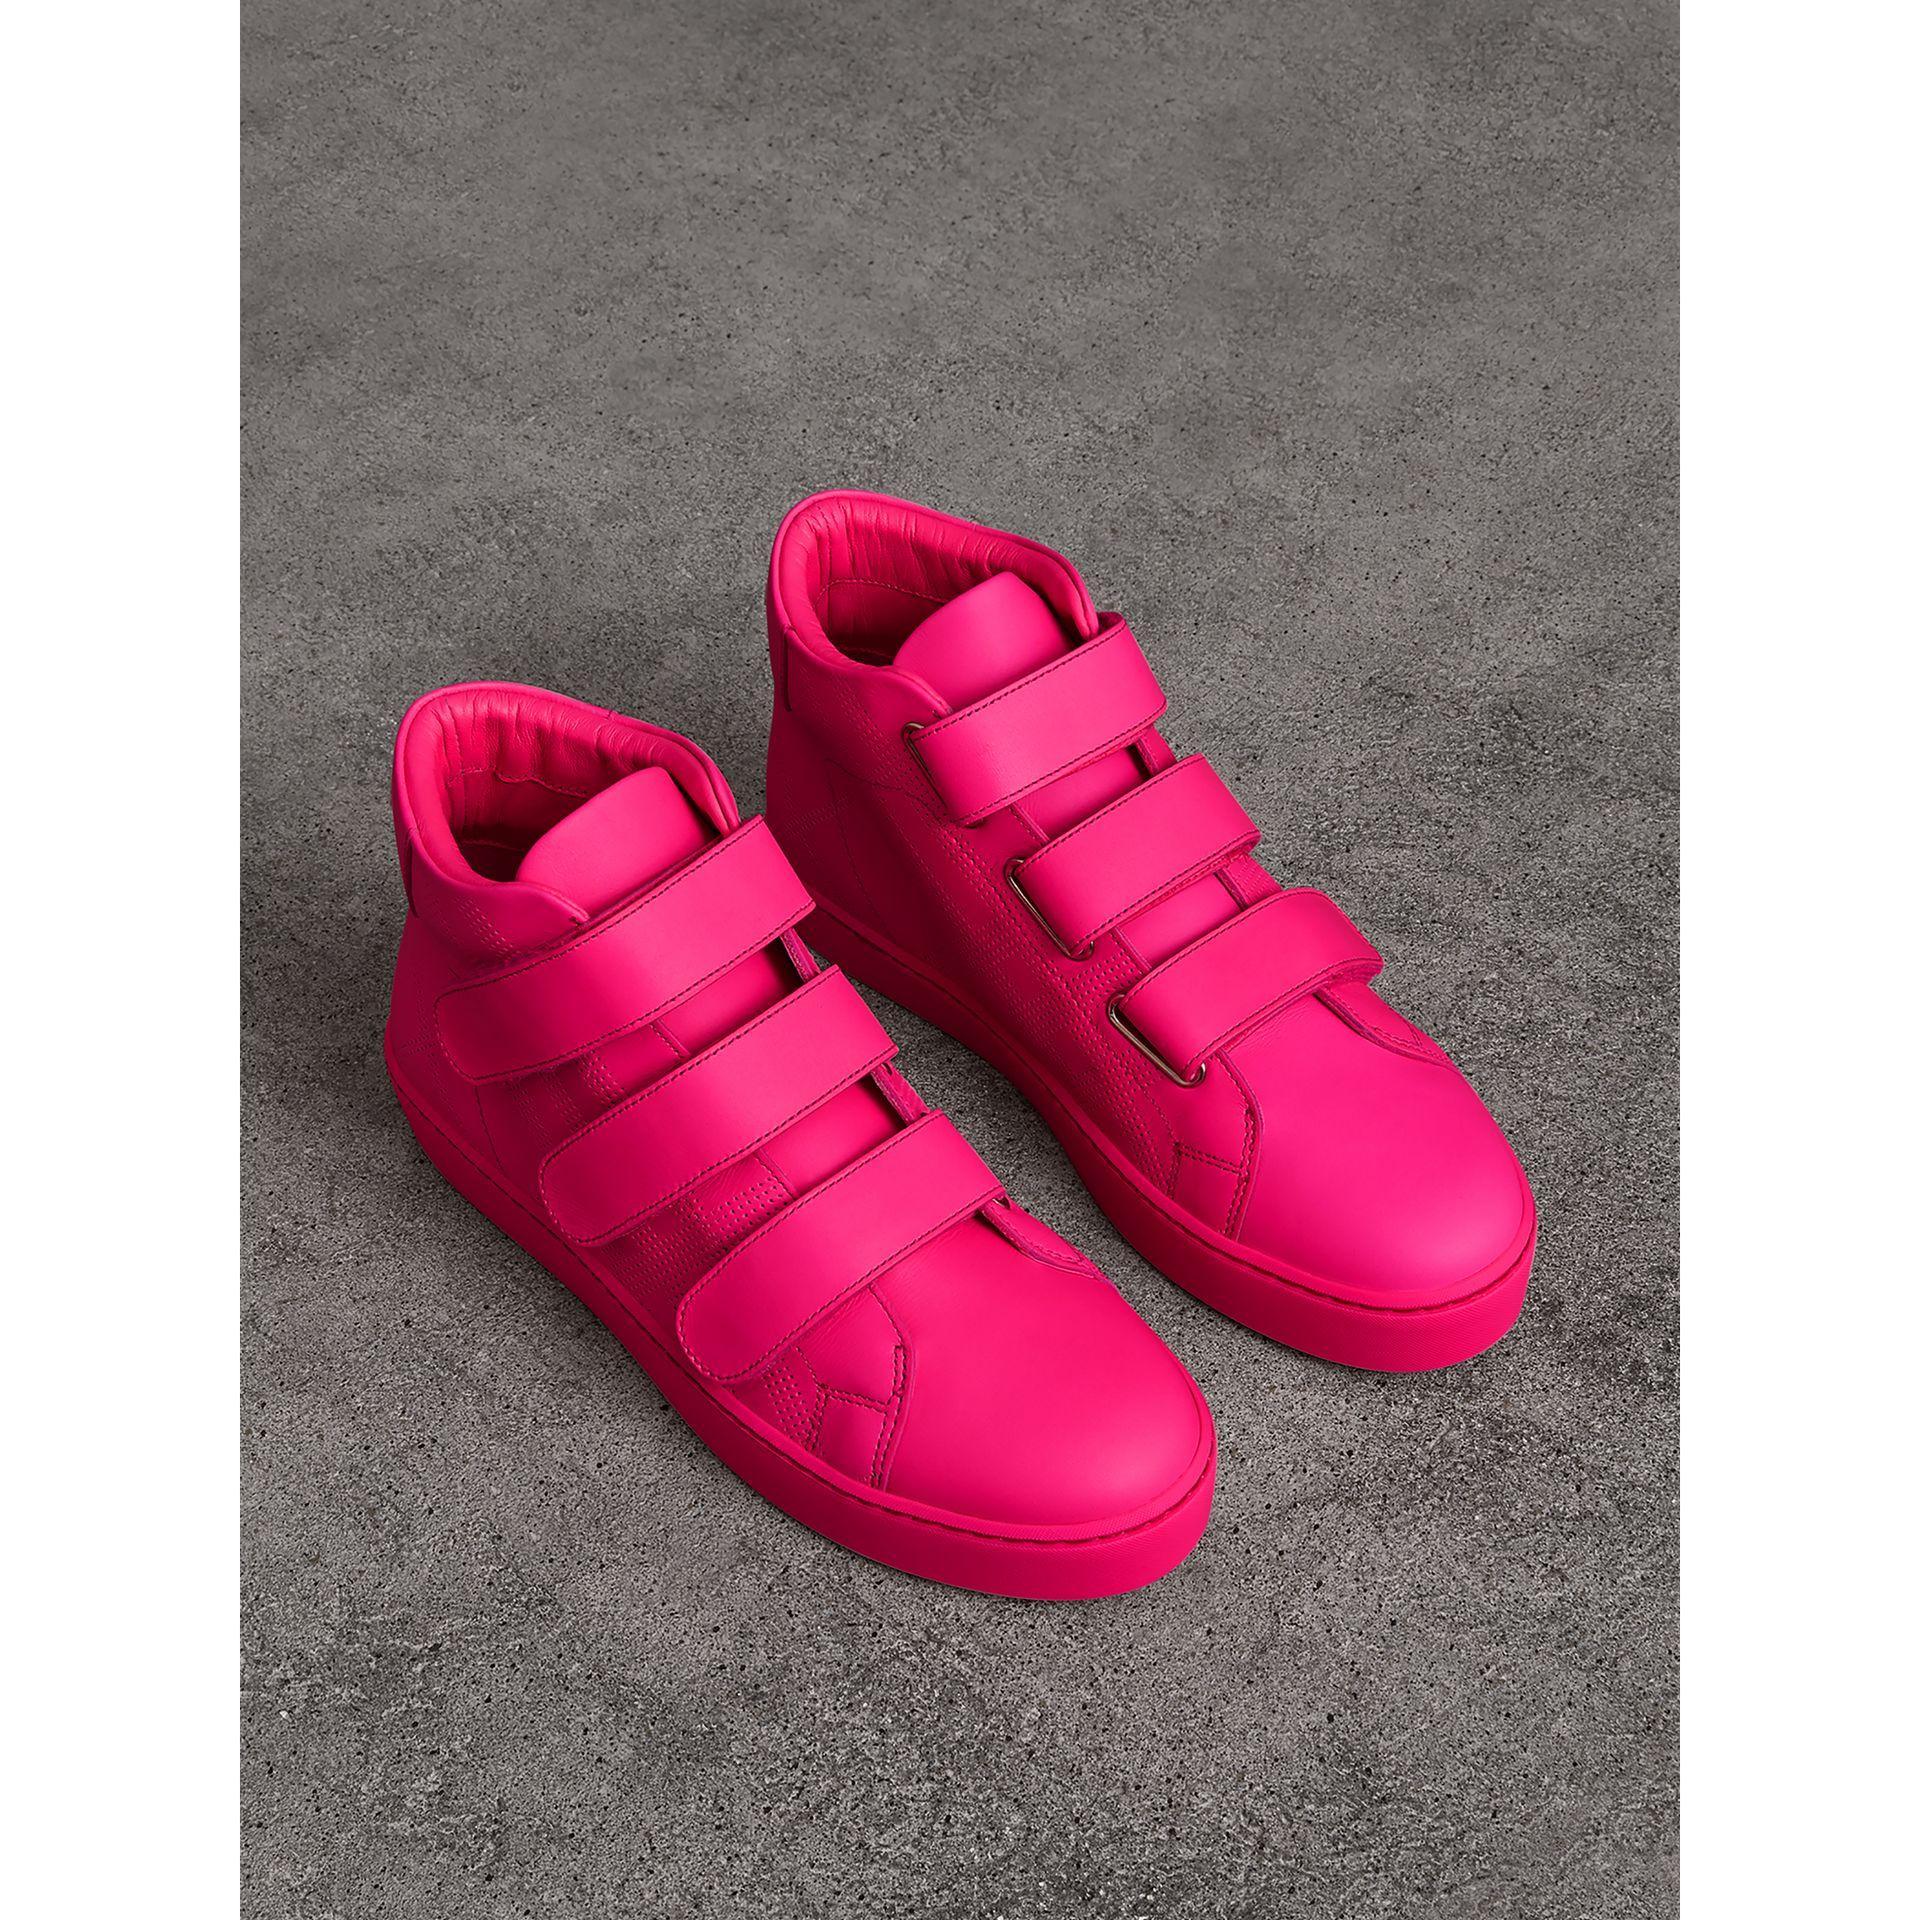 neon pink high top sneakers